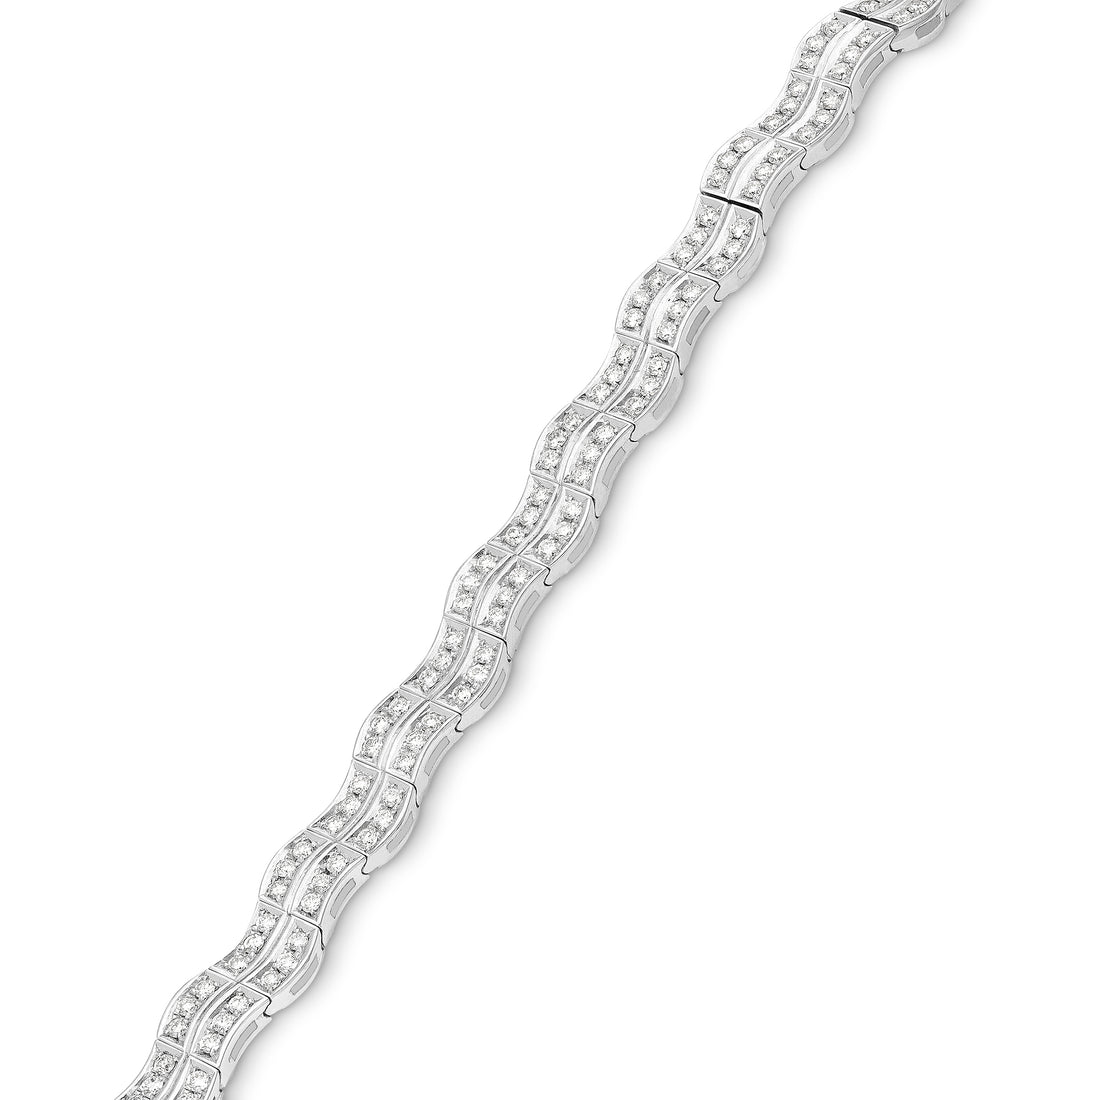 Waved Diamond Tennis Bracelet - 2.3 Carat